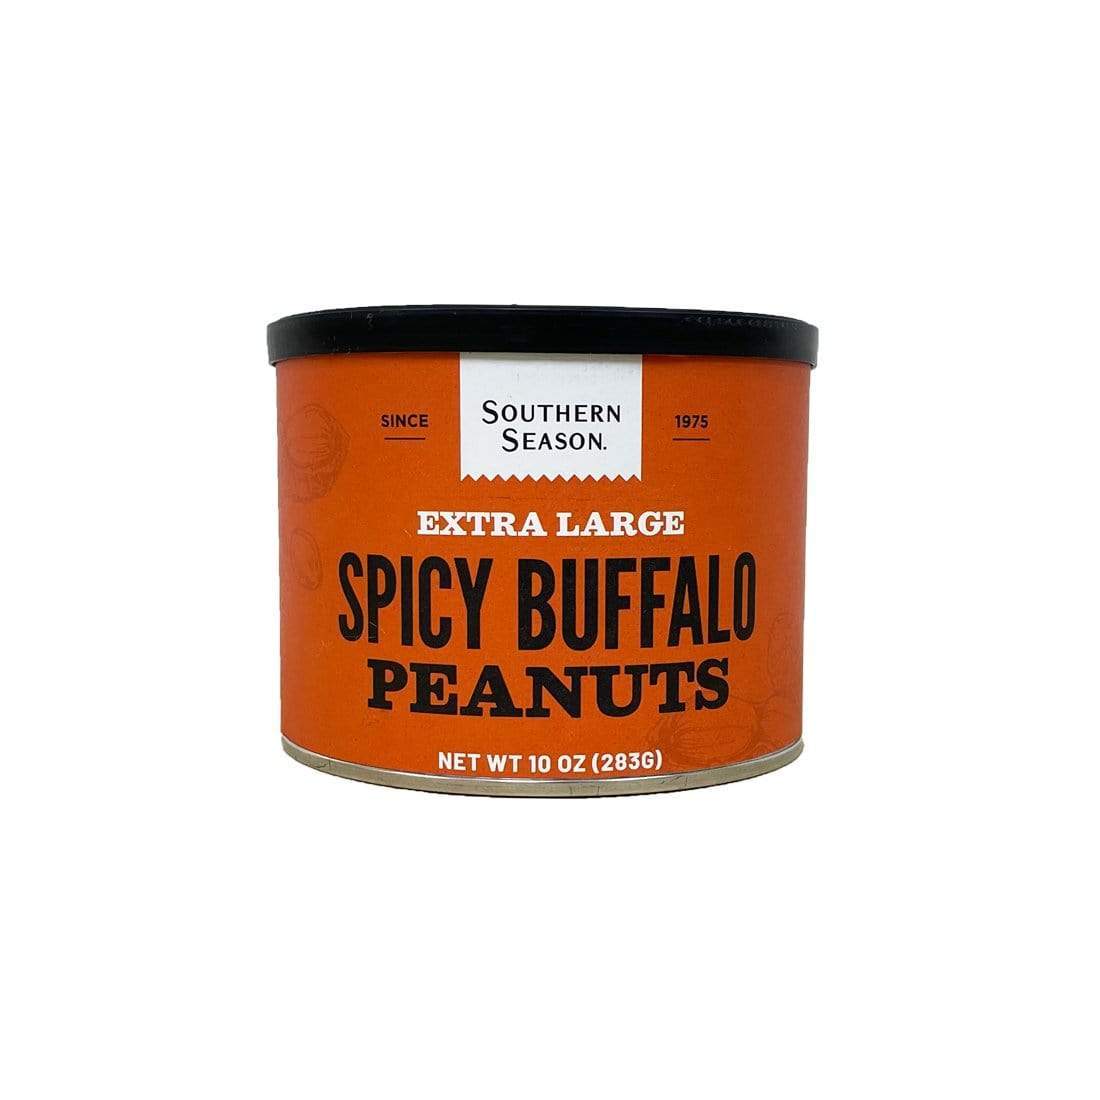 Southern Season Nuts Southern Season Spicy Buffalo Peanuts 10 oz